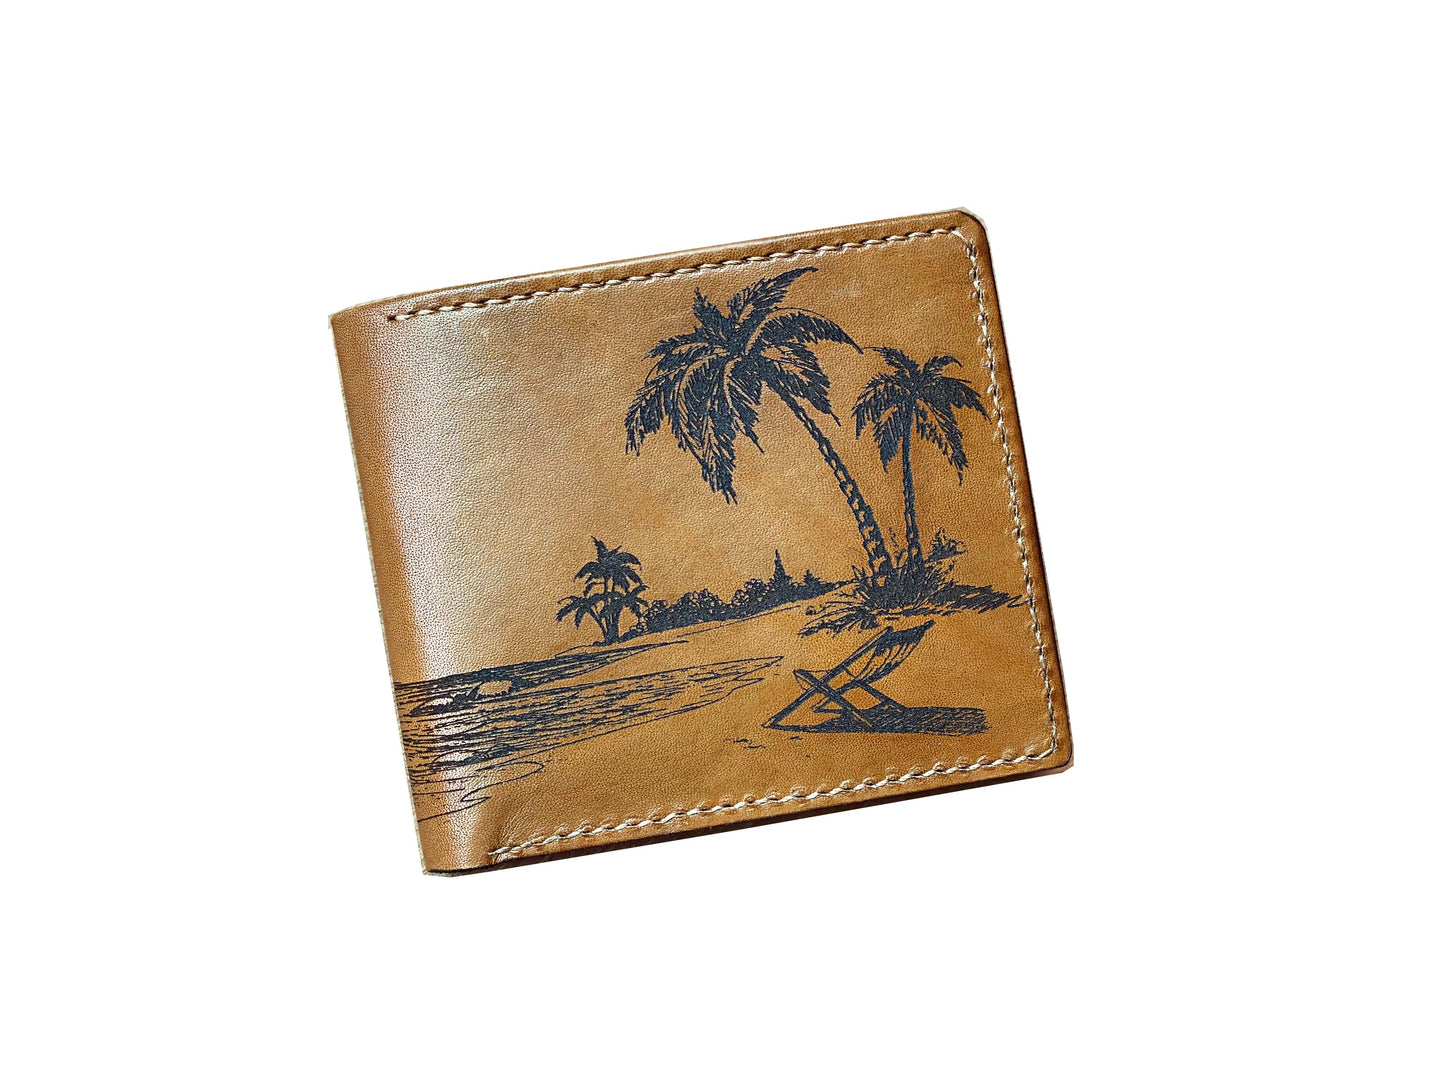 Mayan Corner - Beach landscape tropical leather handmade men's wallet, special gift for men, anniversary birthday wedding present for dad, husband, boyfriend, brother